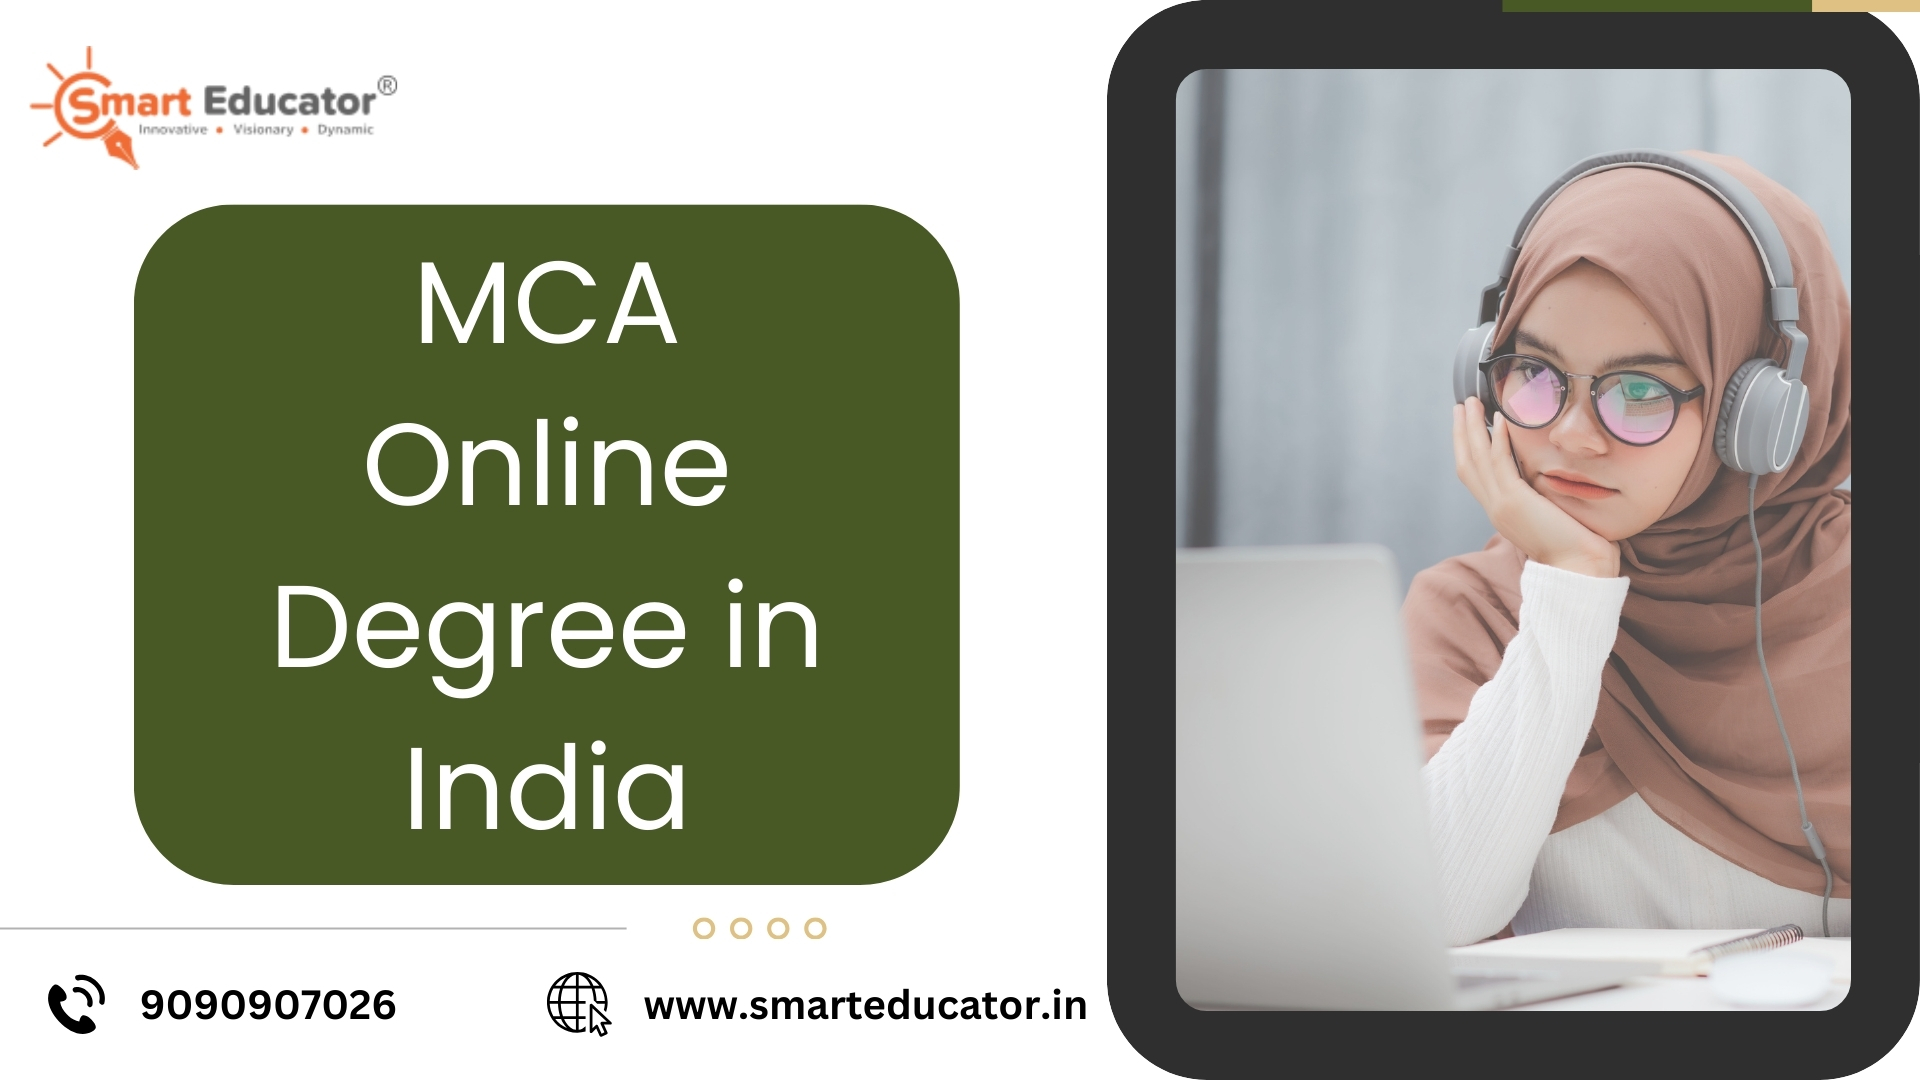  MCA Online Degree in India